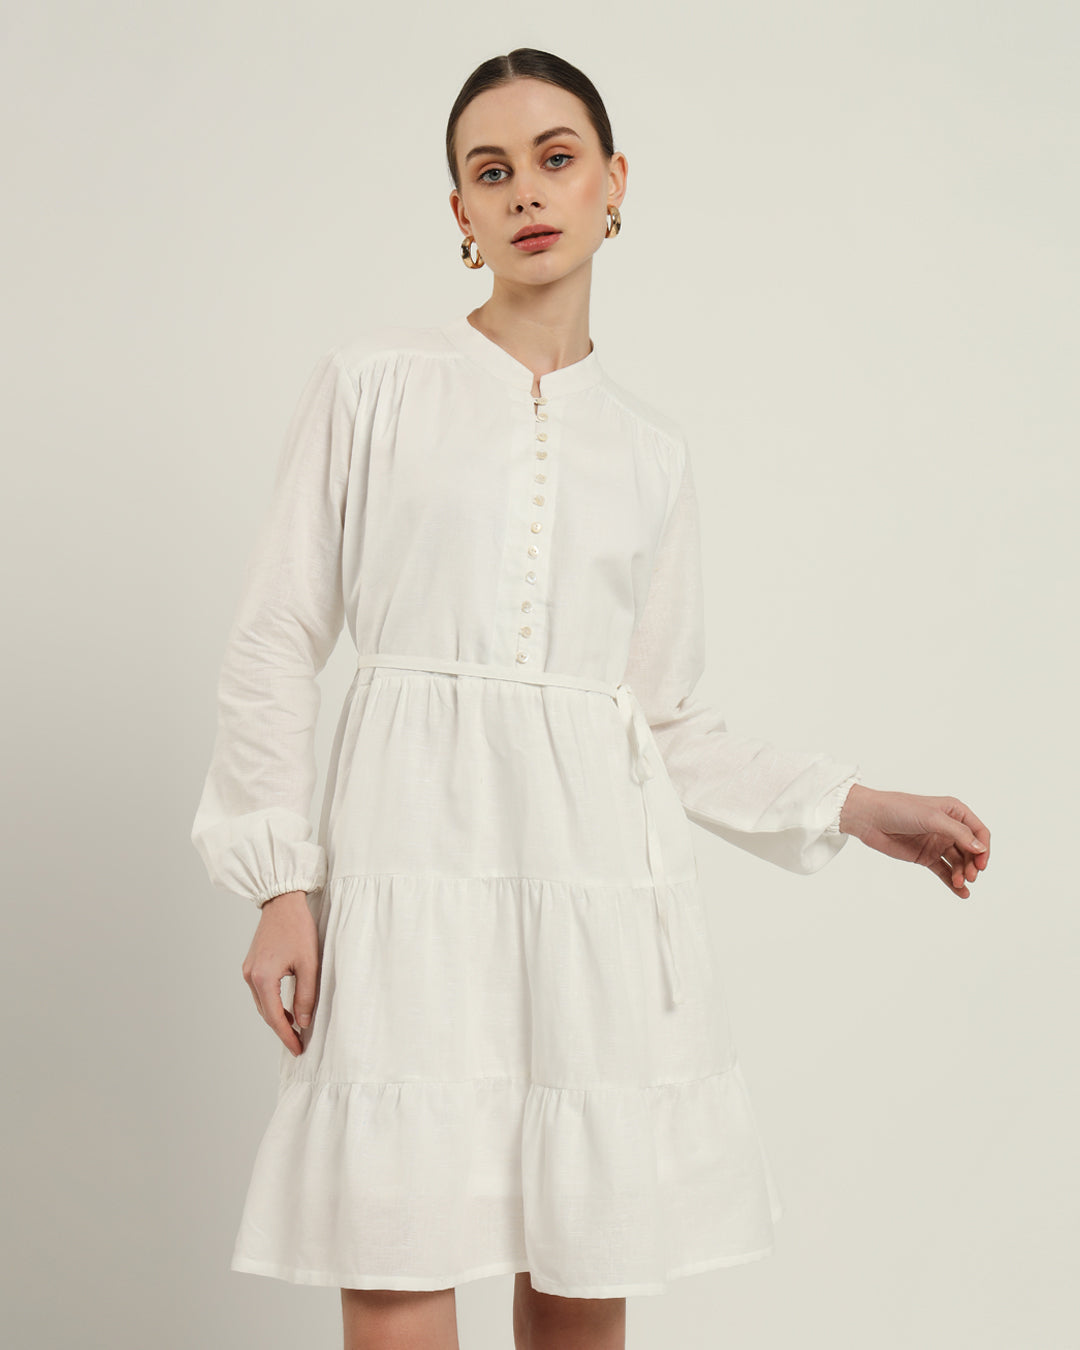 The Ely Daisy White Linen Dress